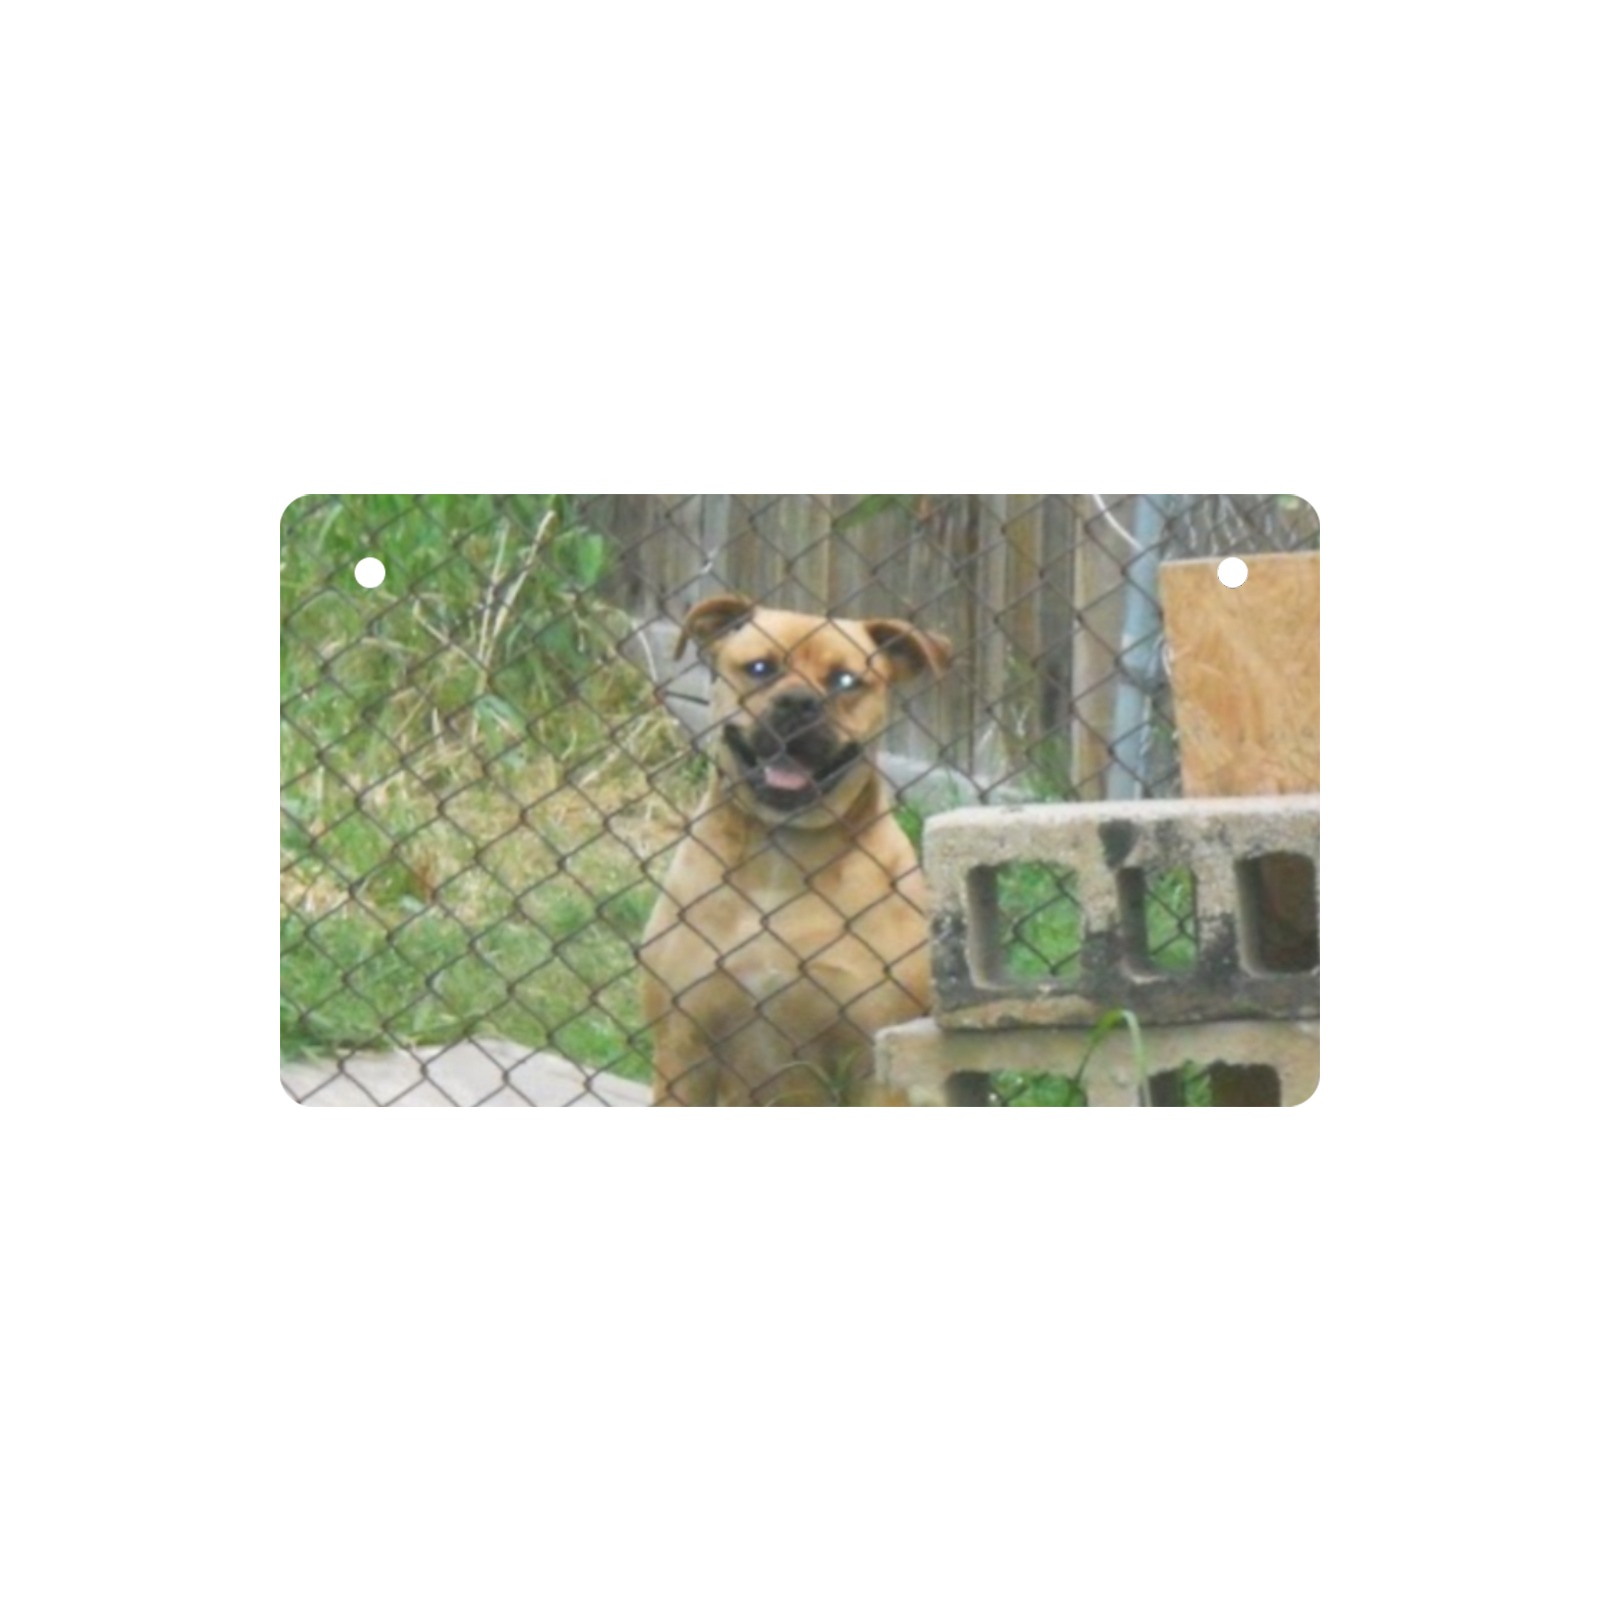 A Smiling Dog Rectangle Wood Door Hanging Sign